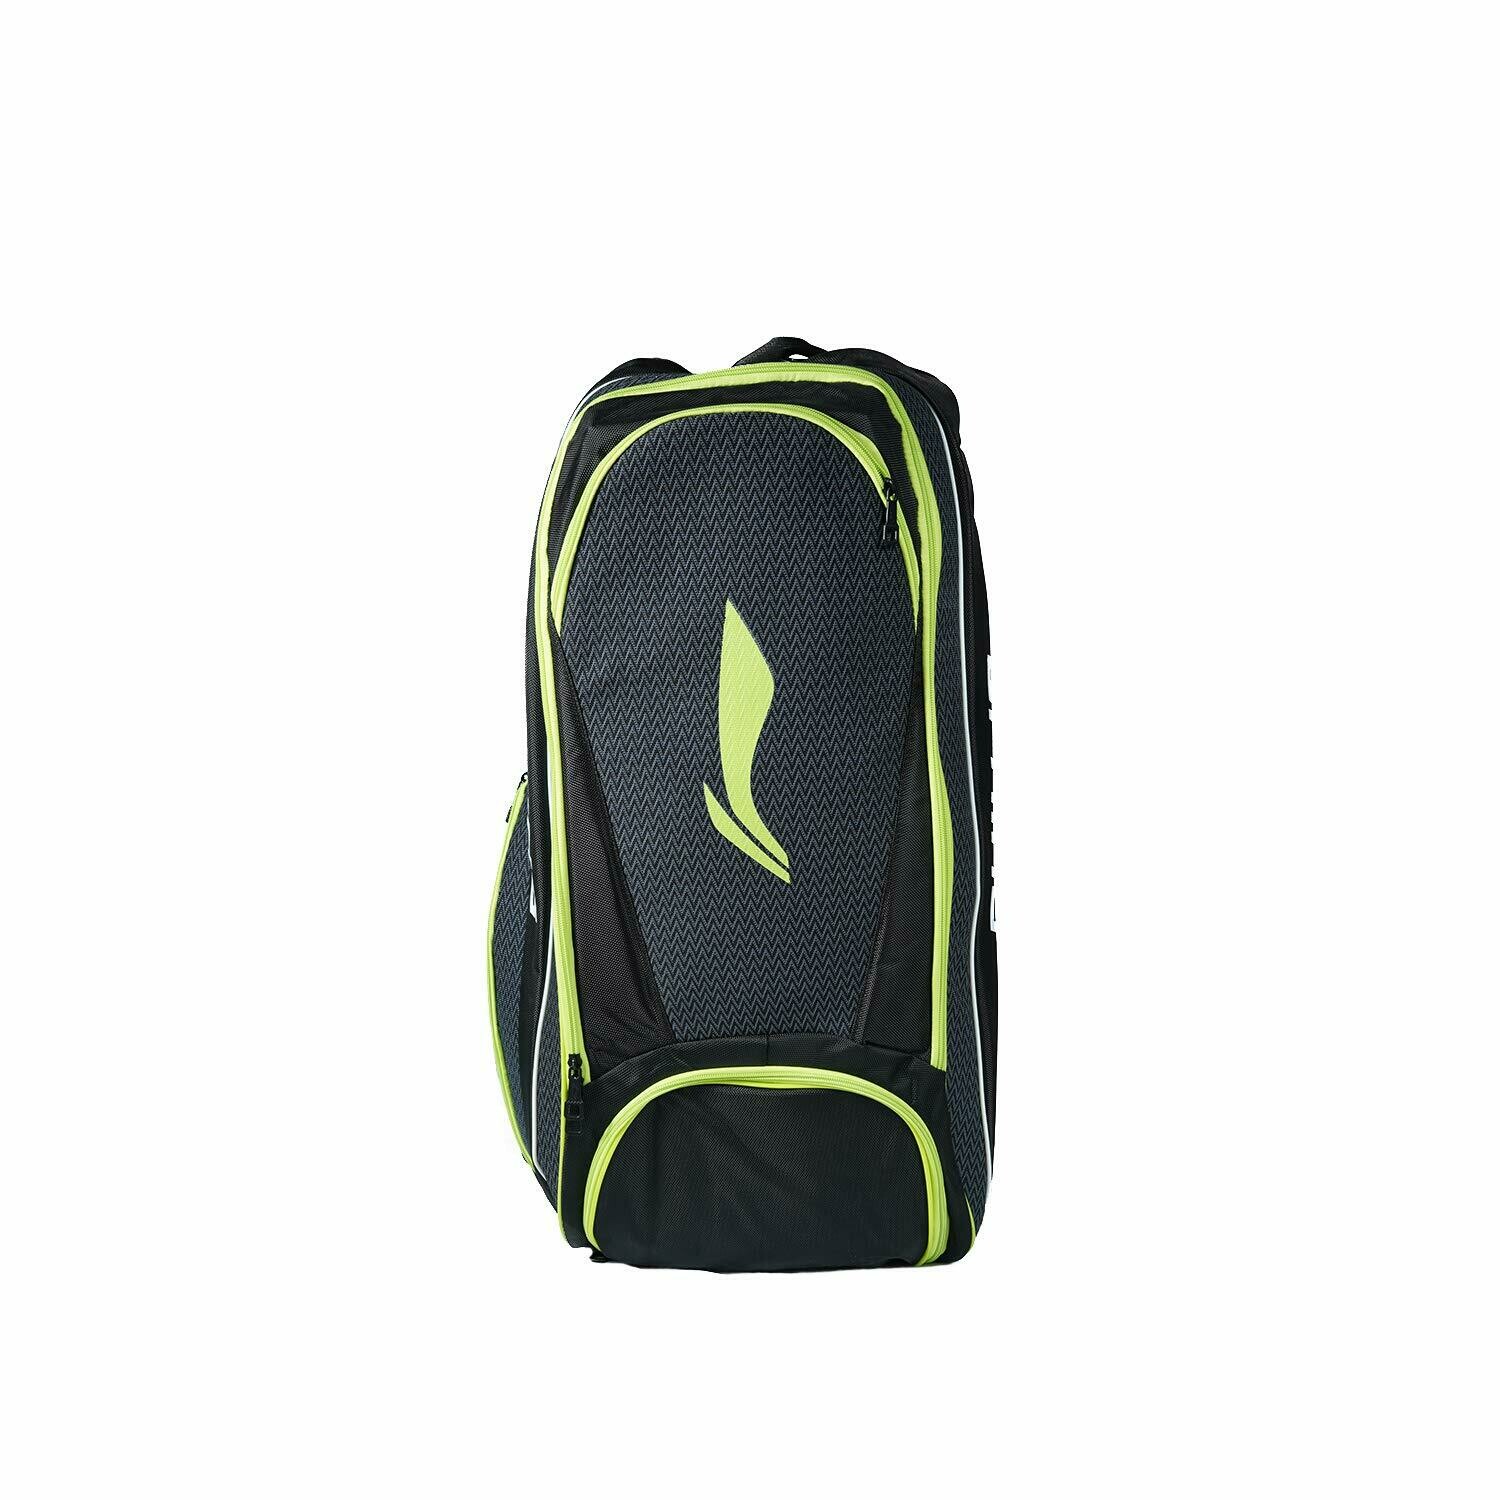 LI-NING ABSL226-6 Badminton Racquet Backpack